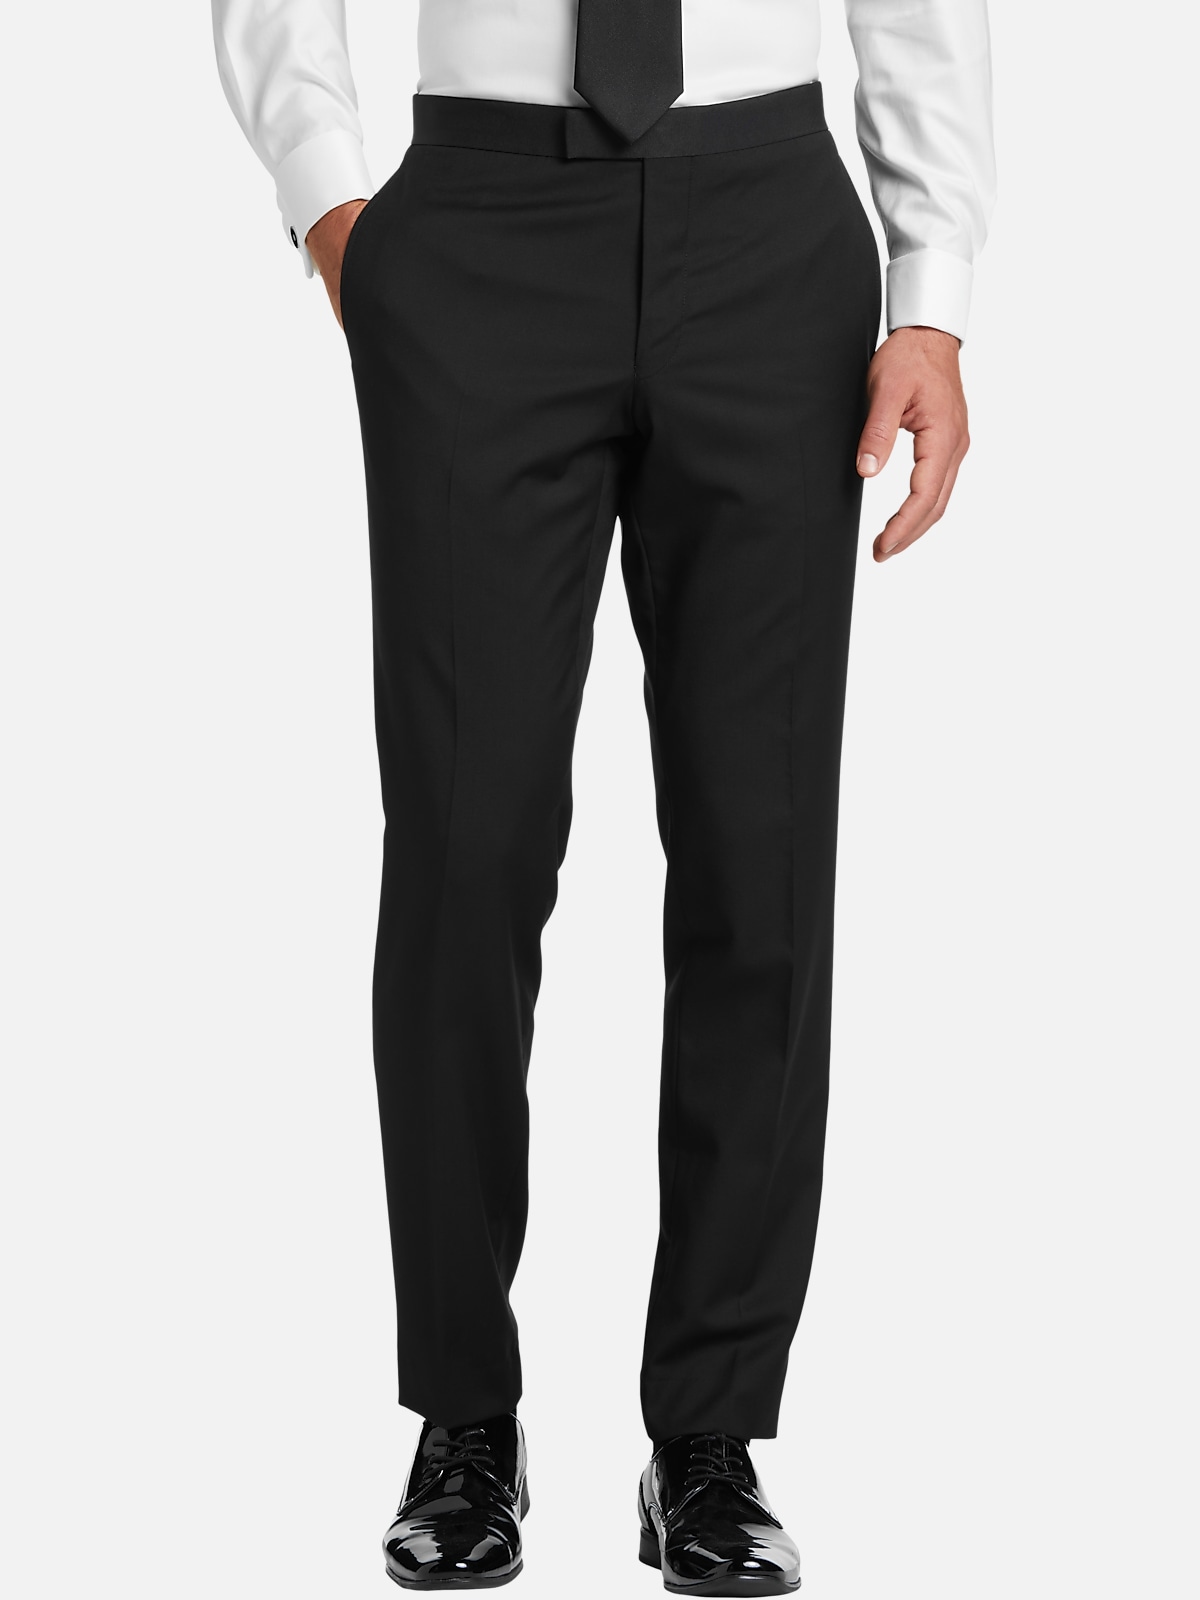 BLACK by Vera Wang Slim Fit Tuxedo Pants | All Clothing| Men's Wearhouse